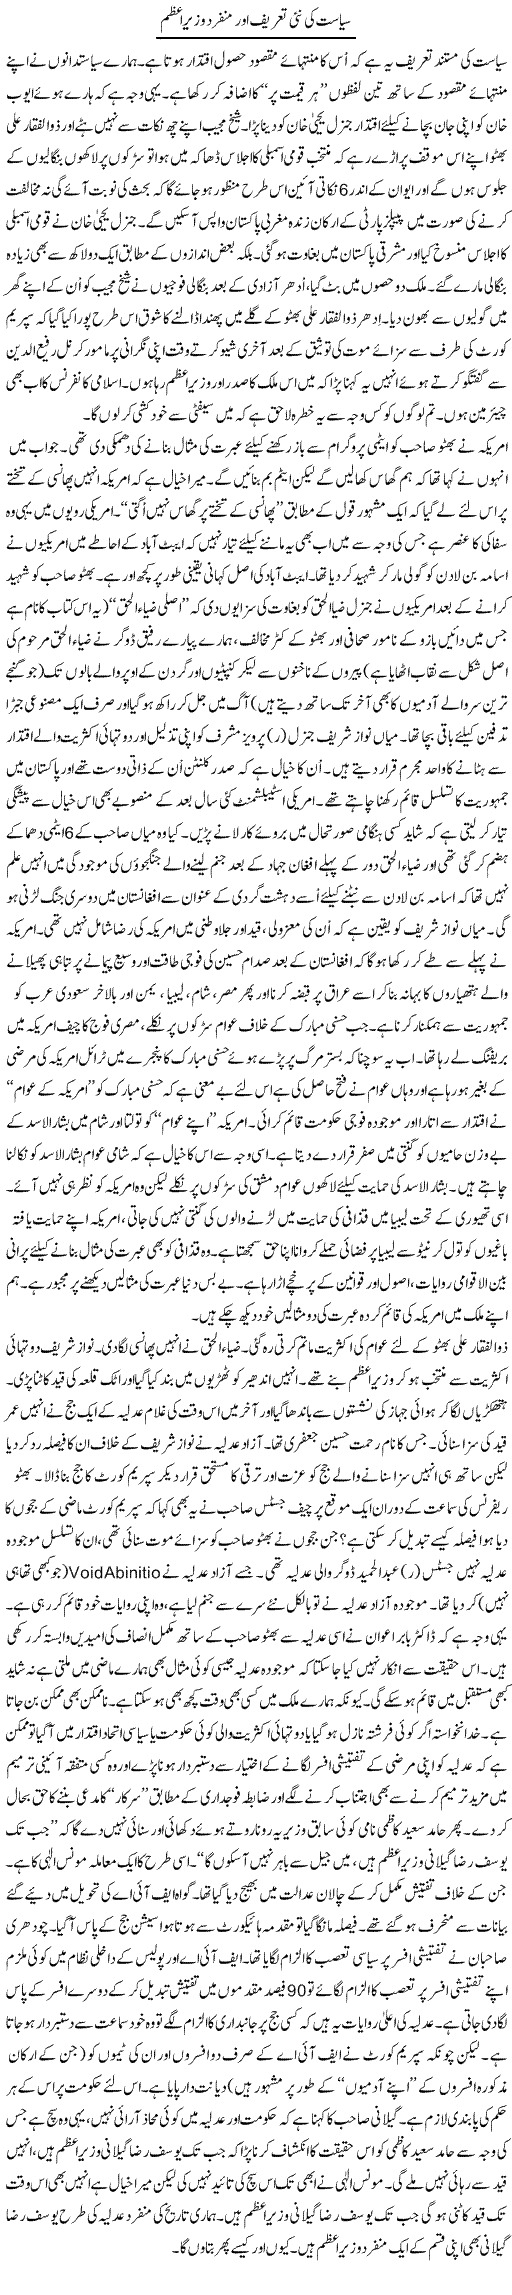 Politics and Geelani Express Column Abbas Athar 7 August 2011